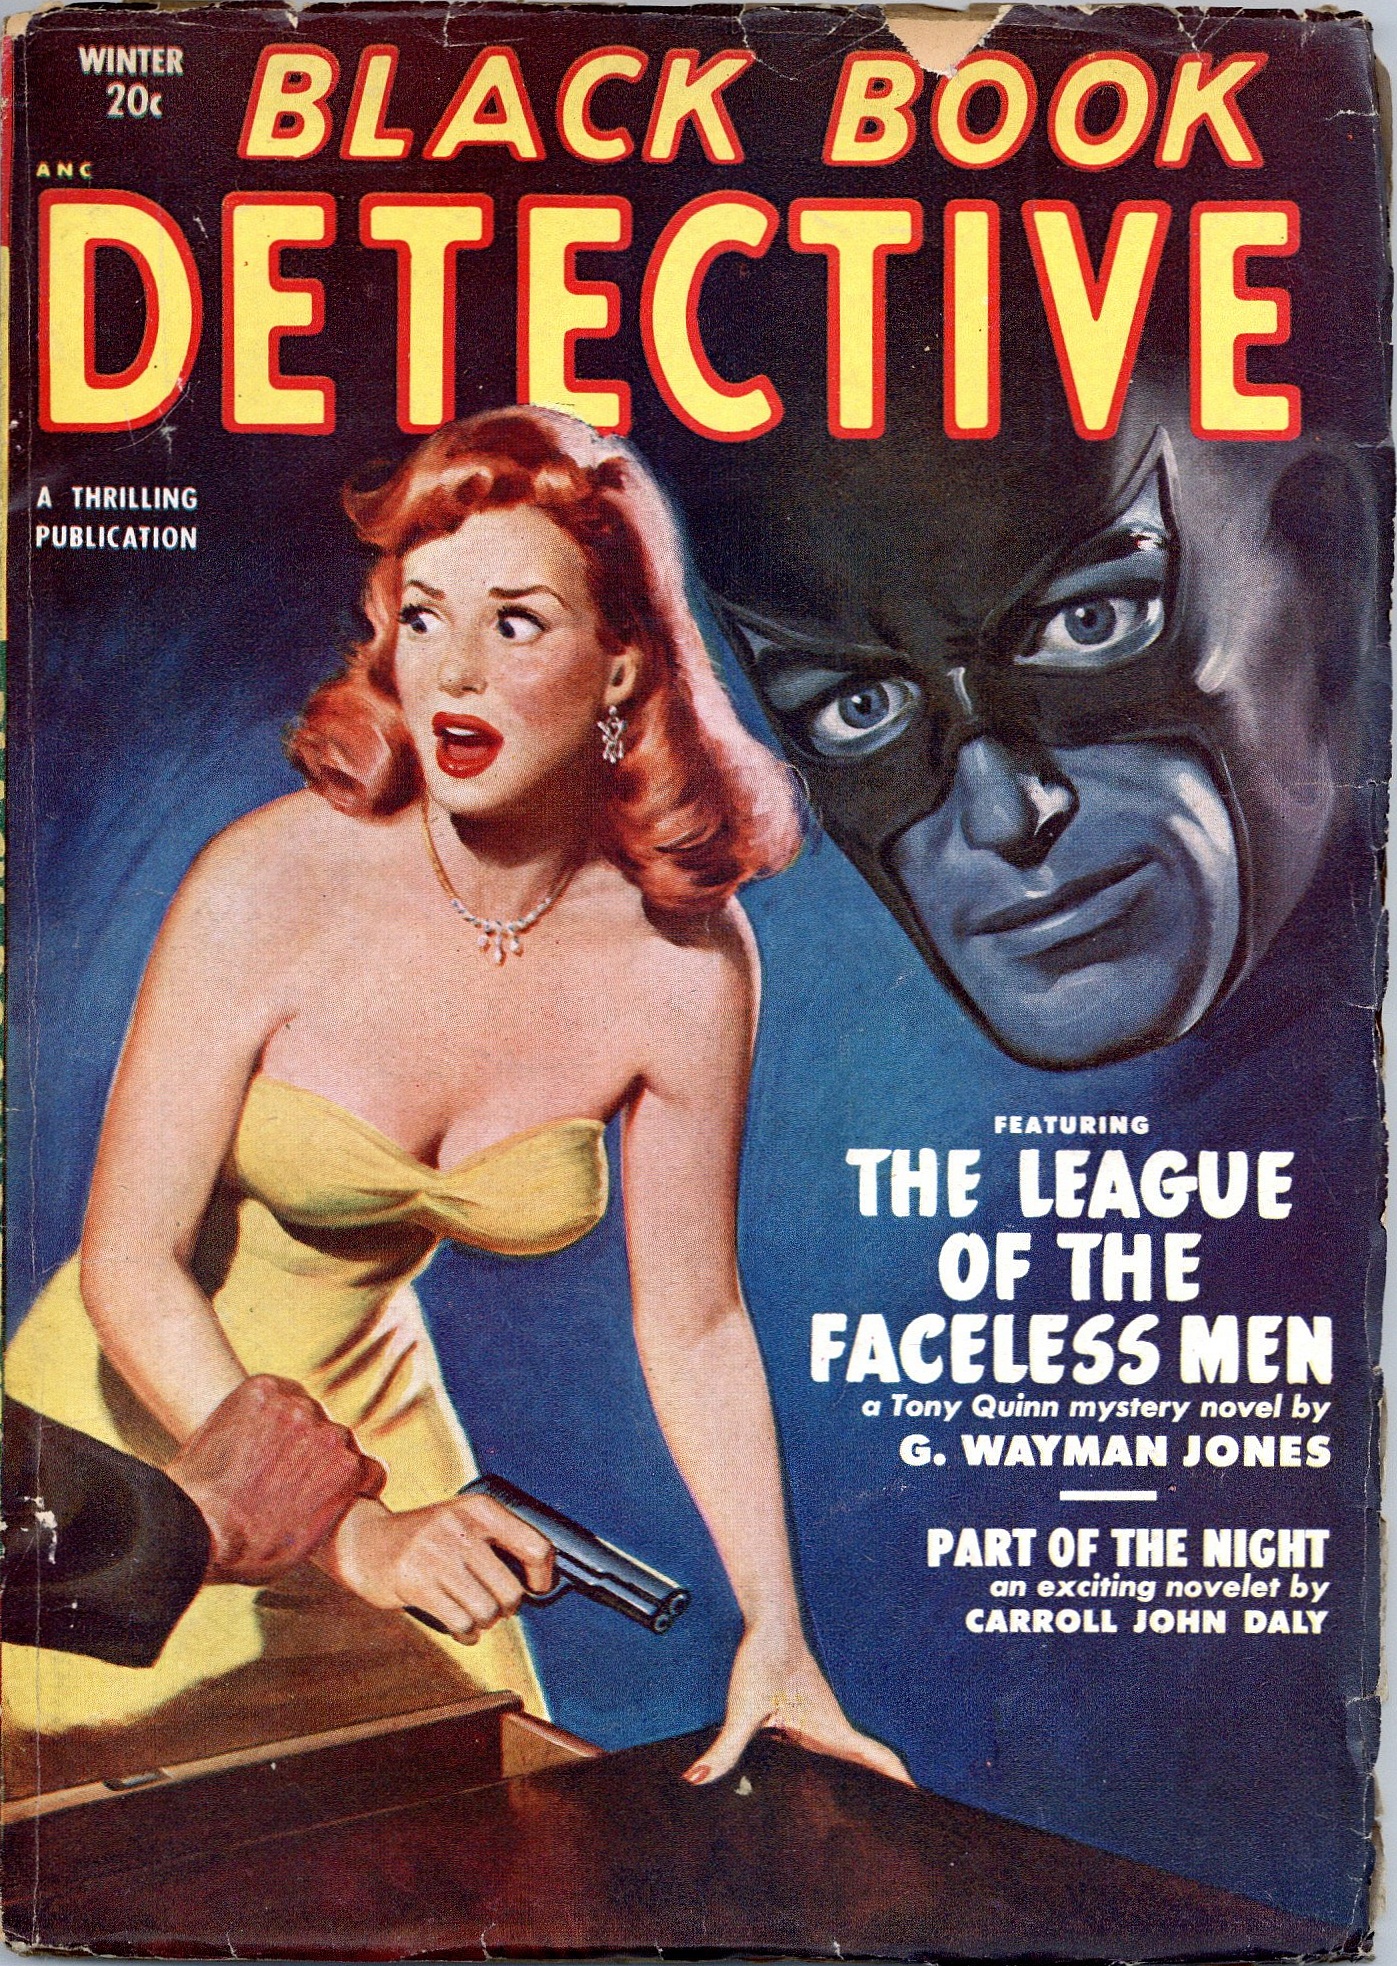 Black Book Detective Winter 1951